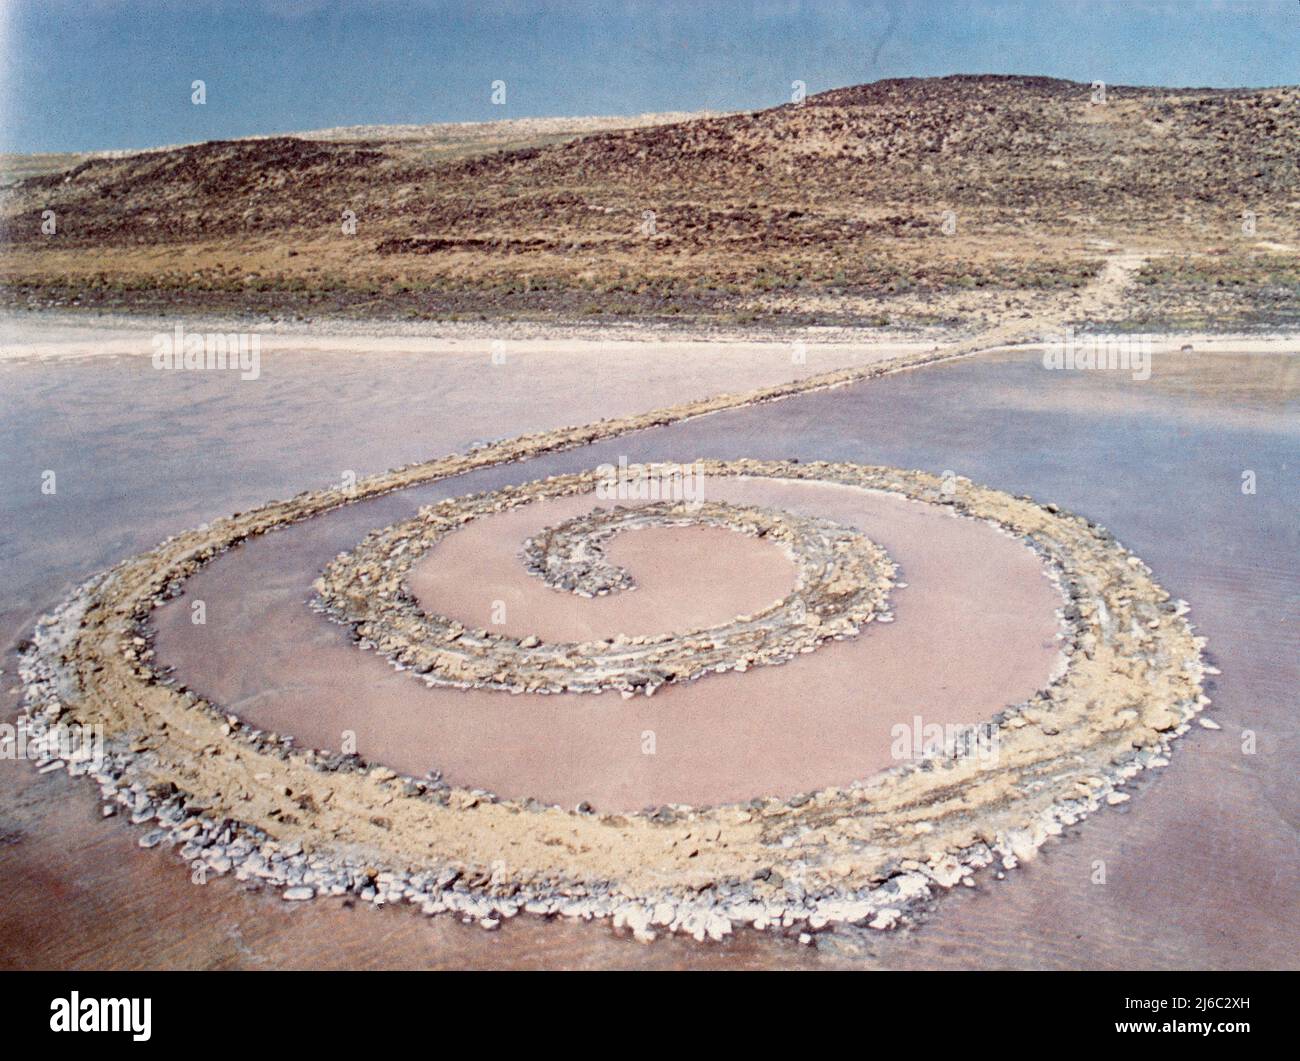 Spiral jetty, artwork by American artist Robert Smithson, 1970 Stock Photo